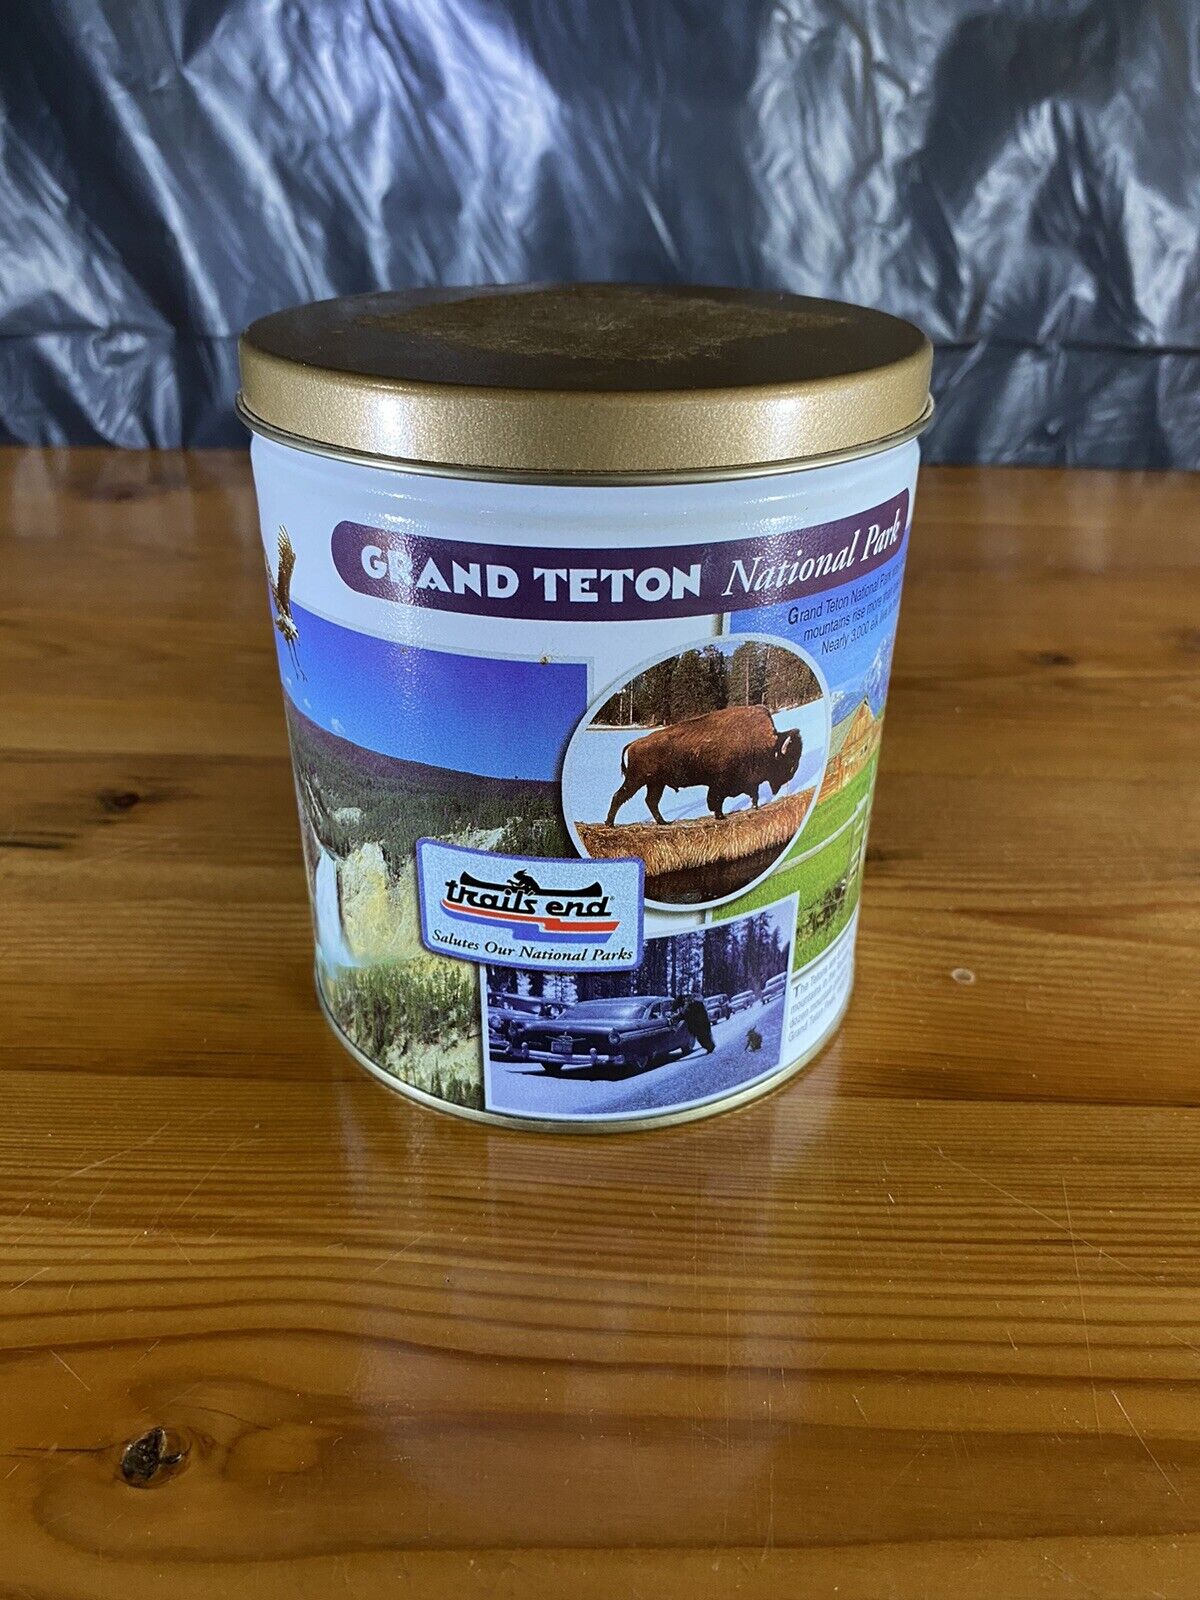 Vintage National Parks Tin Can Yellowstone, Grand Teton Trail\'s End, 1996 1997